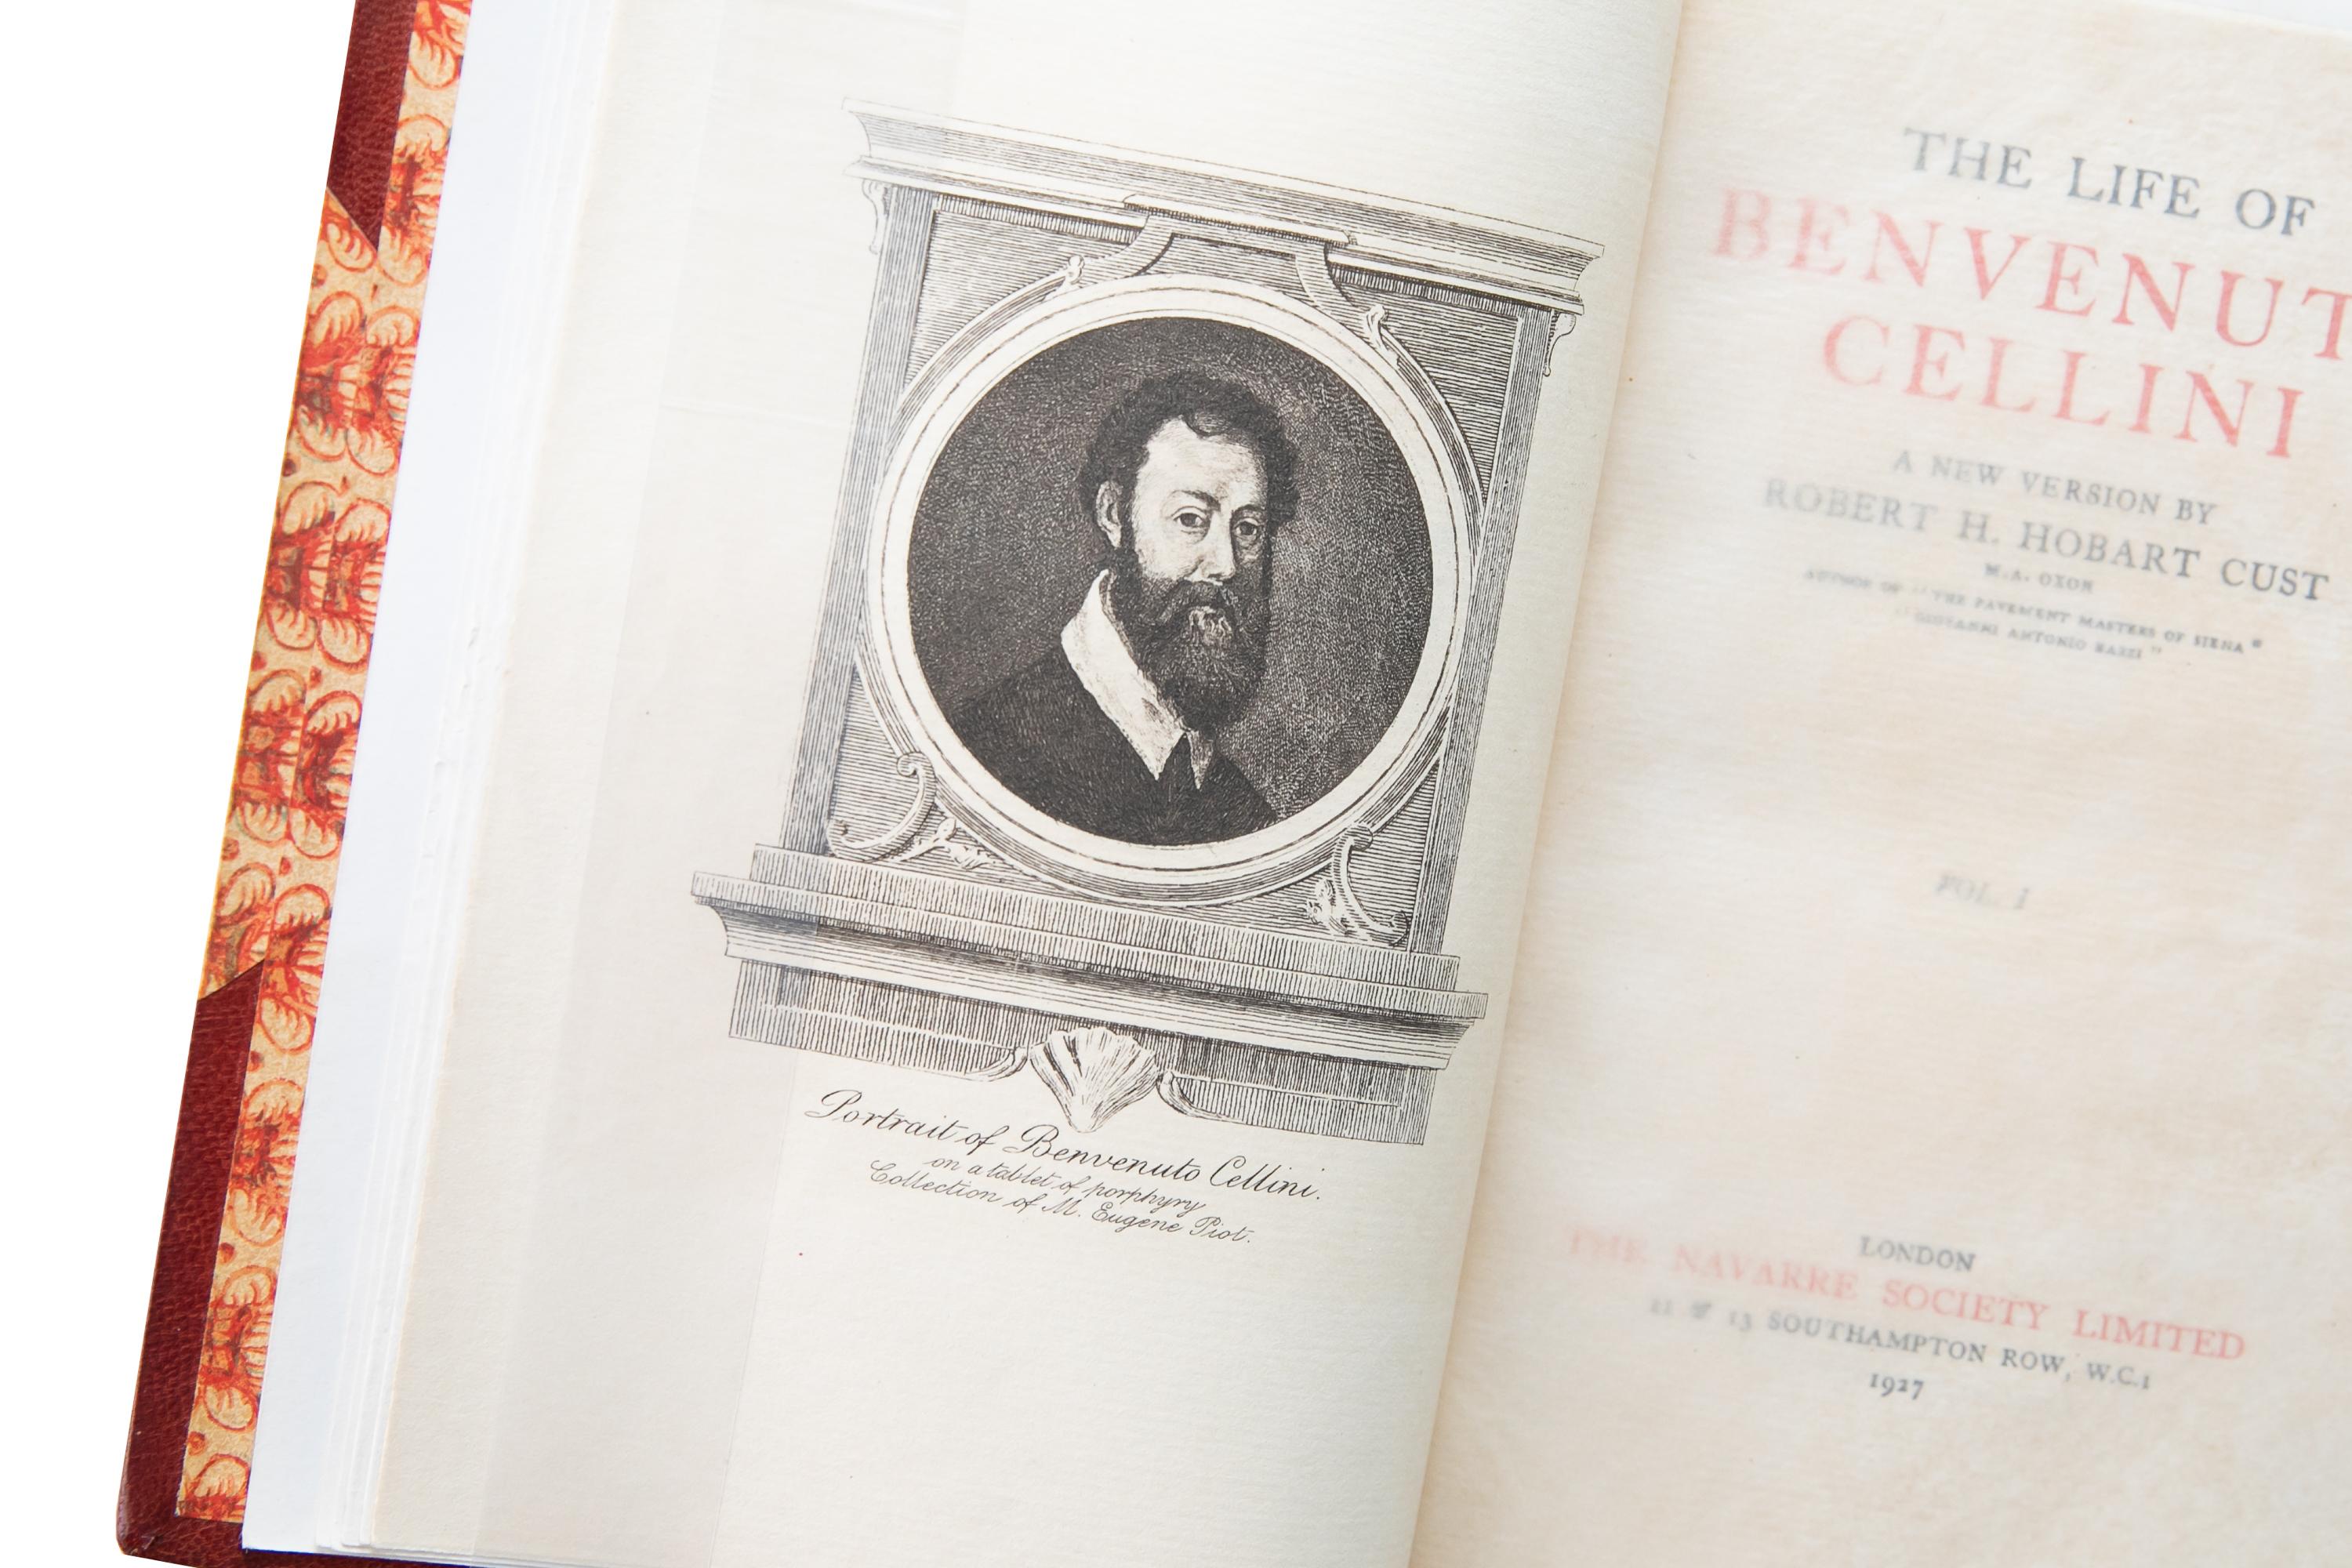 English 2 Volumes. Robert H. Hobart Cust, The Life of Benvenuto Cellini.